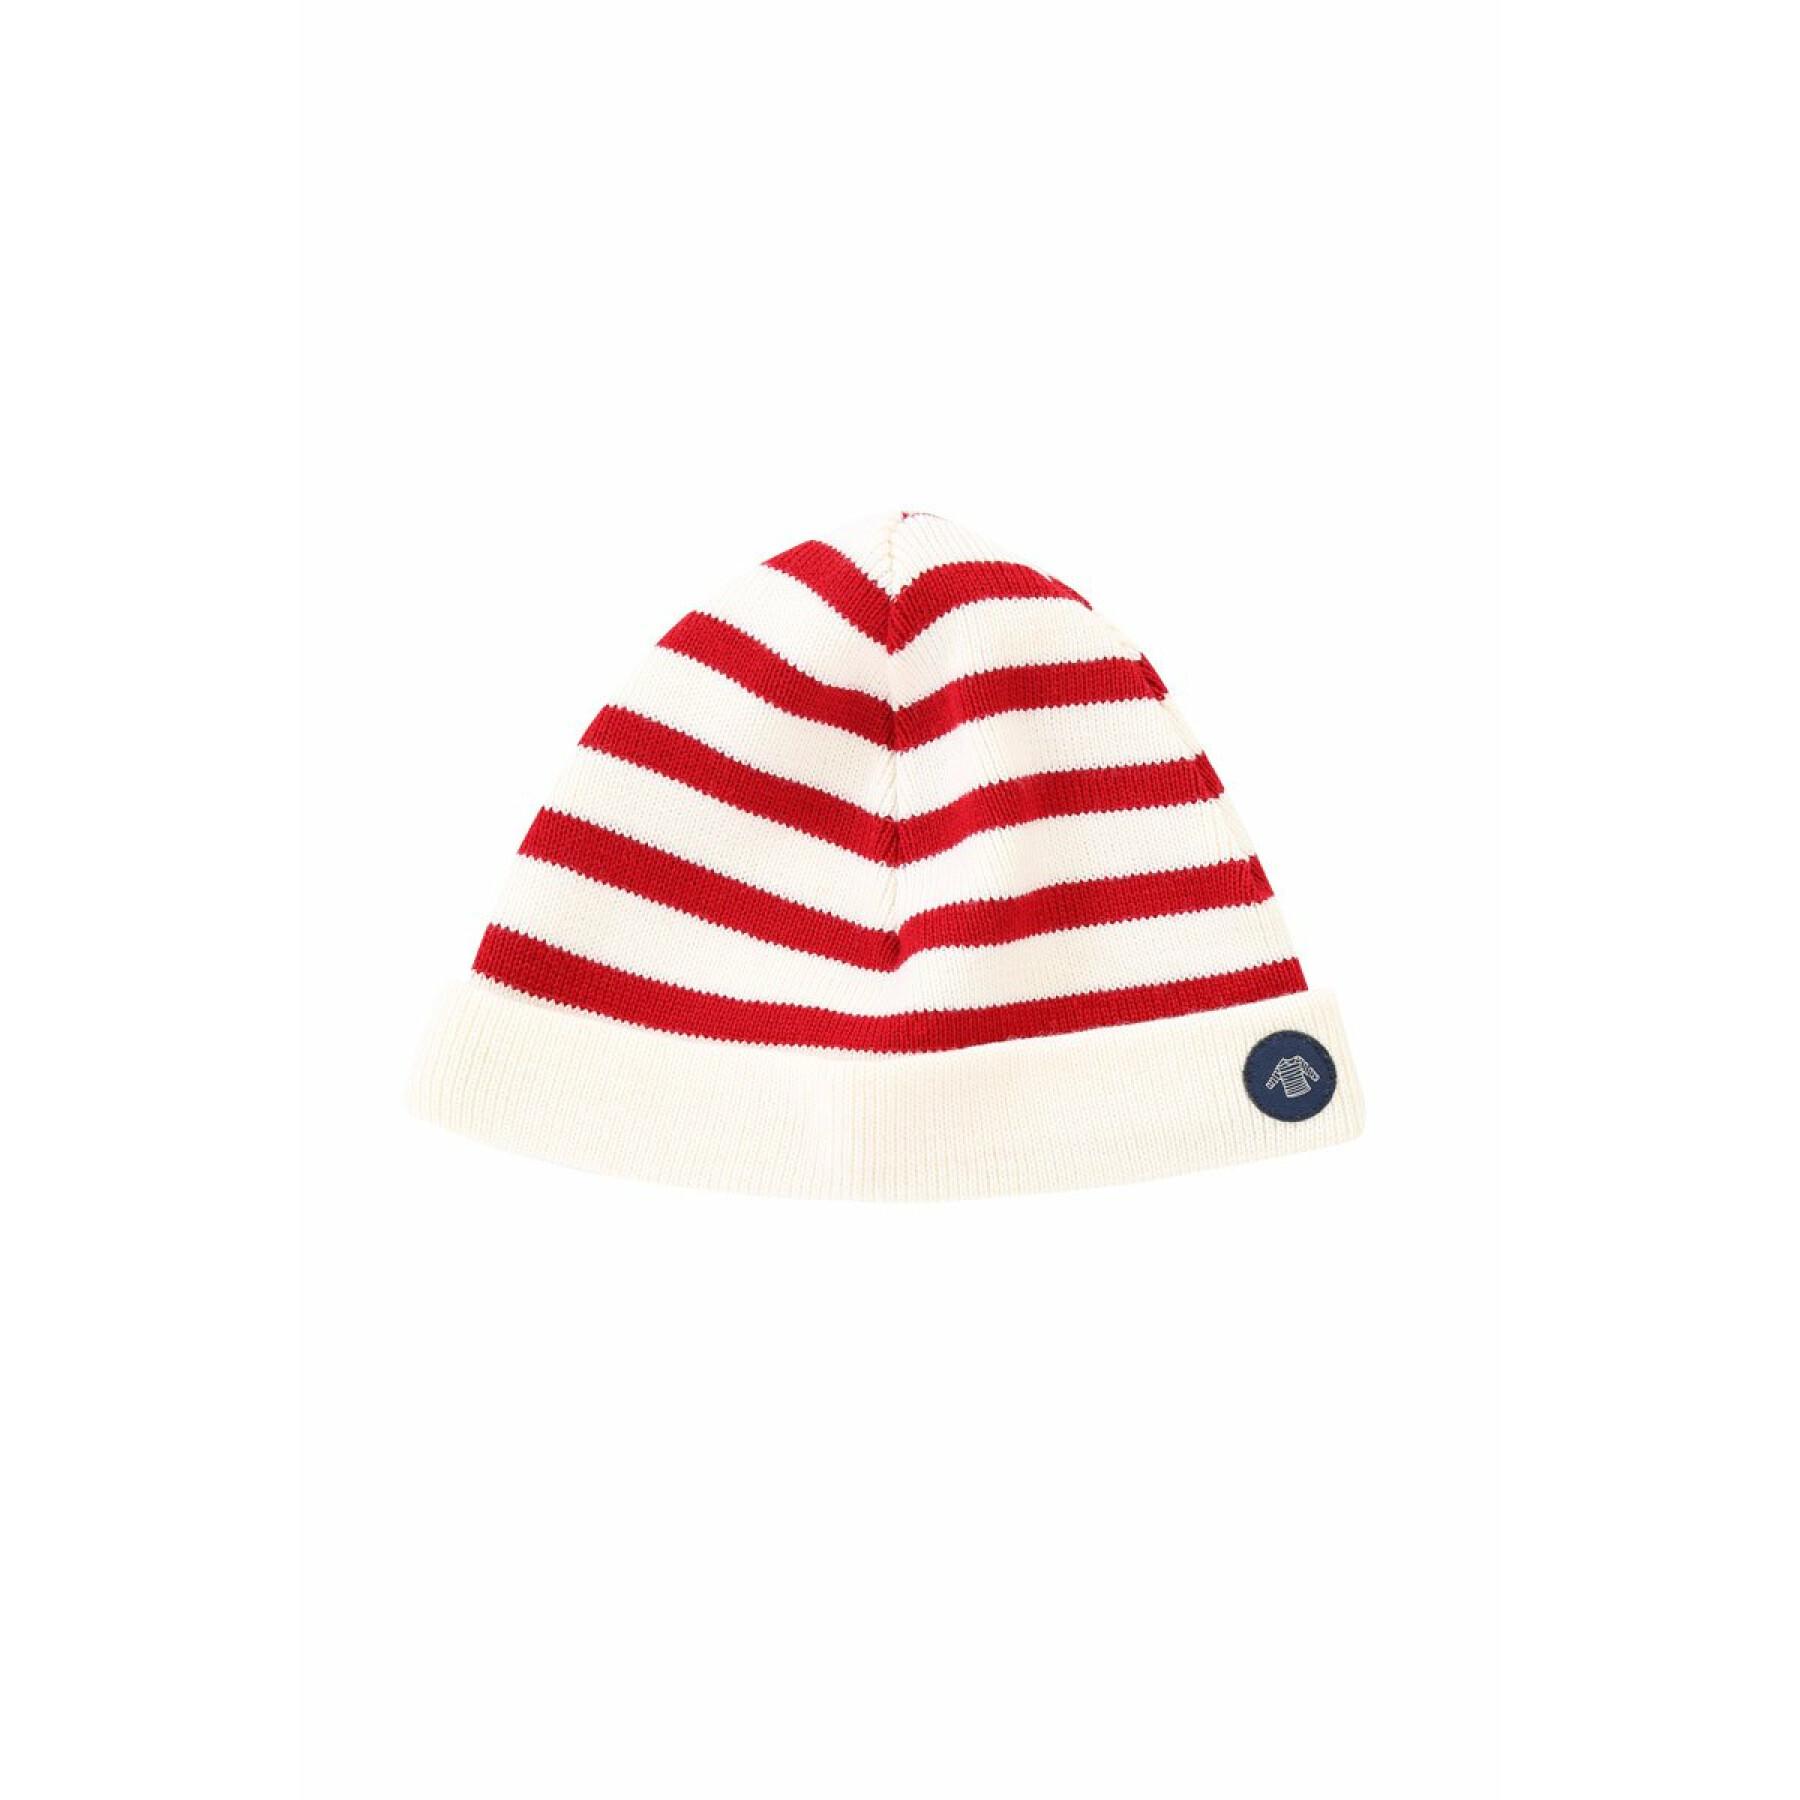 Striped hat for children Armor-Lux lannion